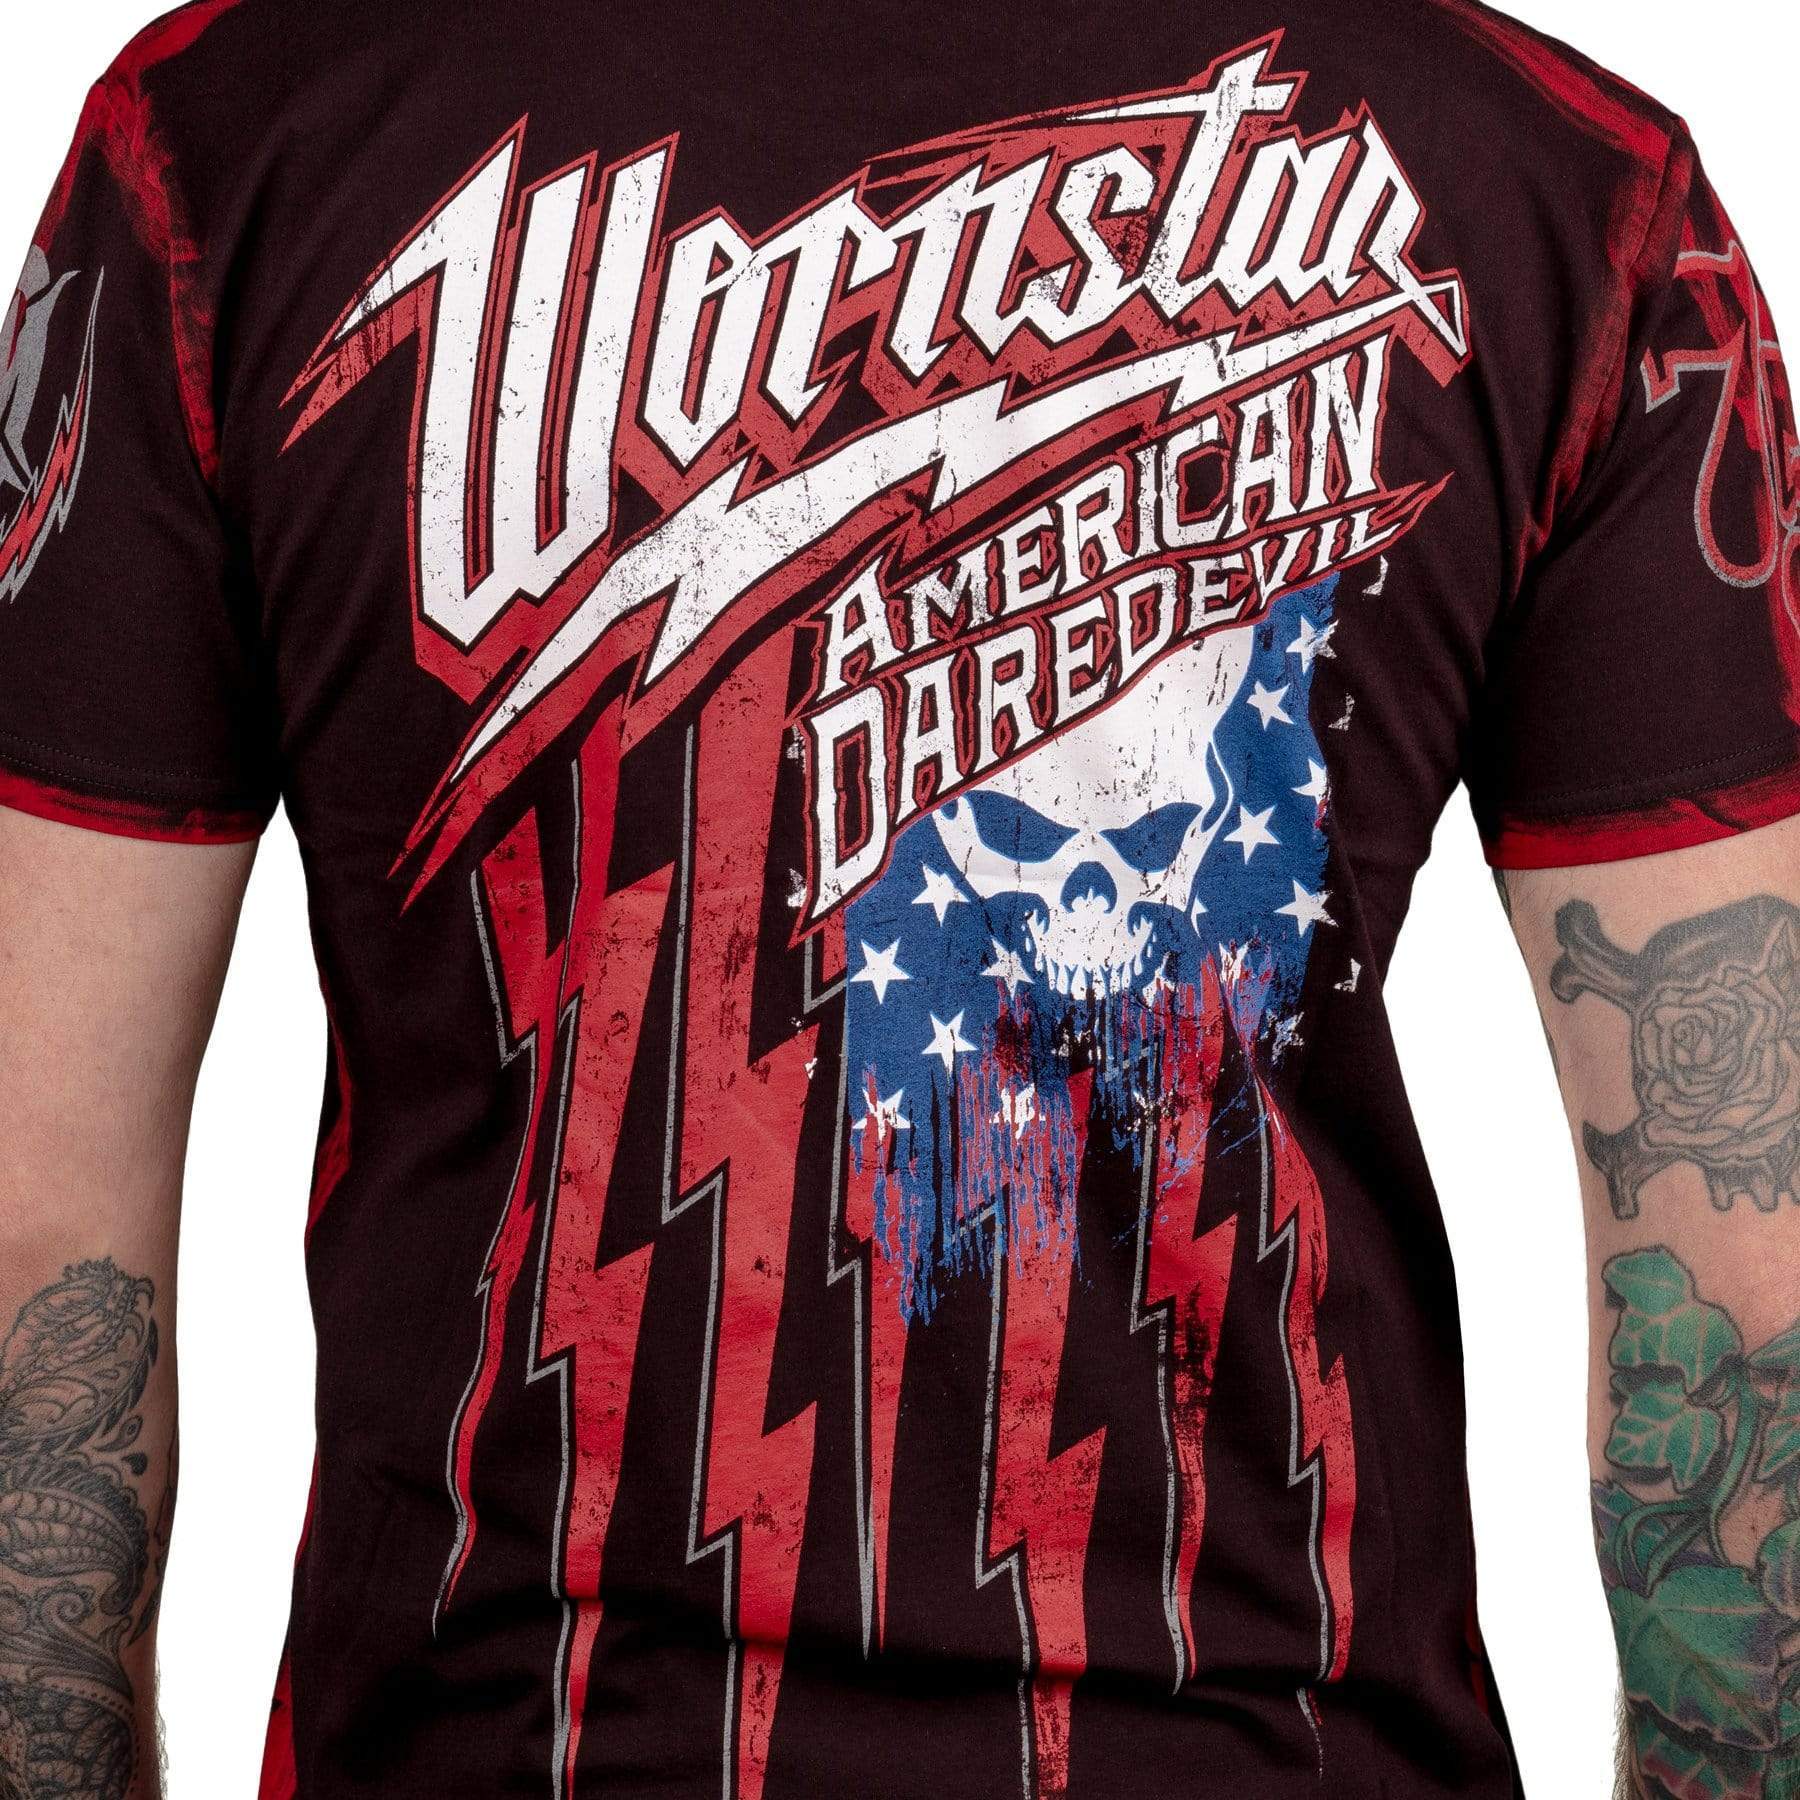 Artist Asylum Collection T-Shirt American Daredevil Tee